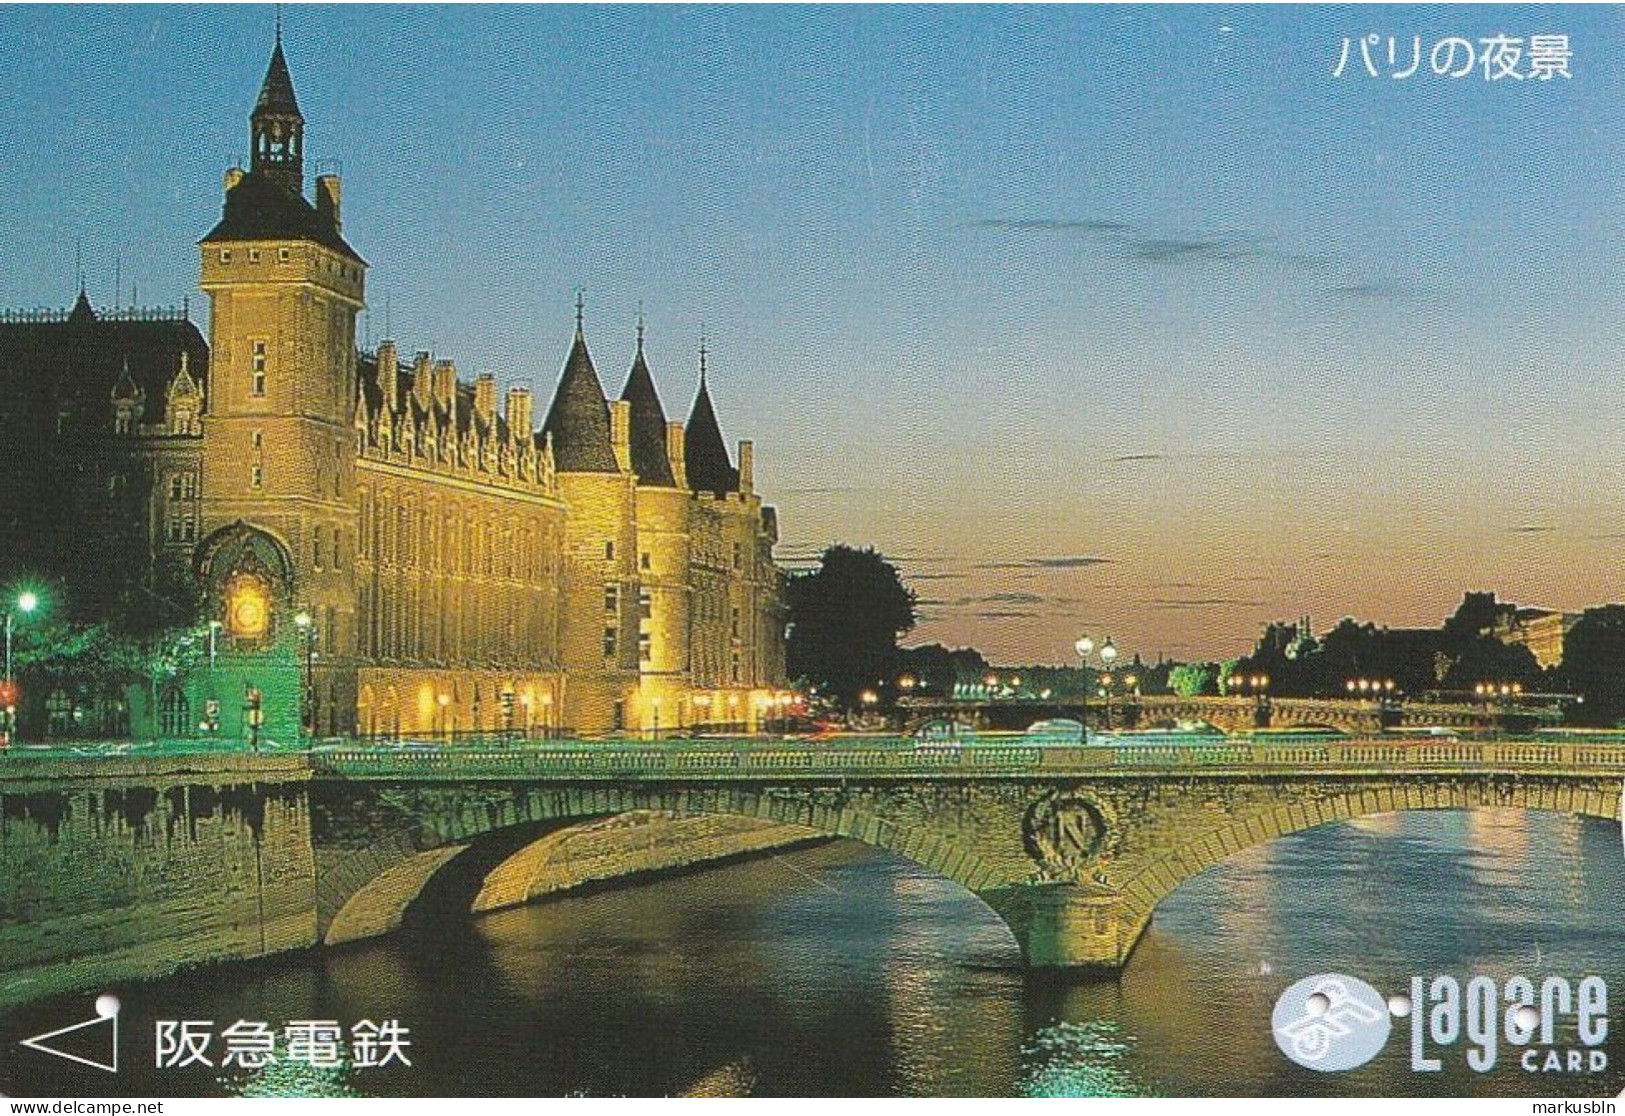 Japan Prepaid Langare Card 3000 - France Paris By Night Sunset - Japan